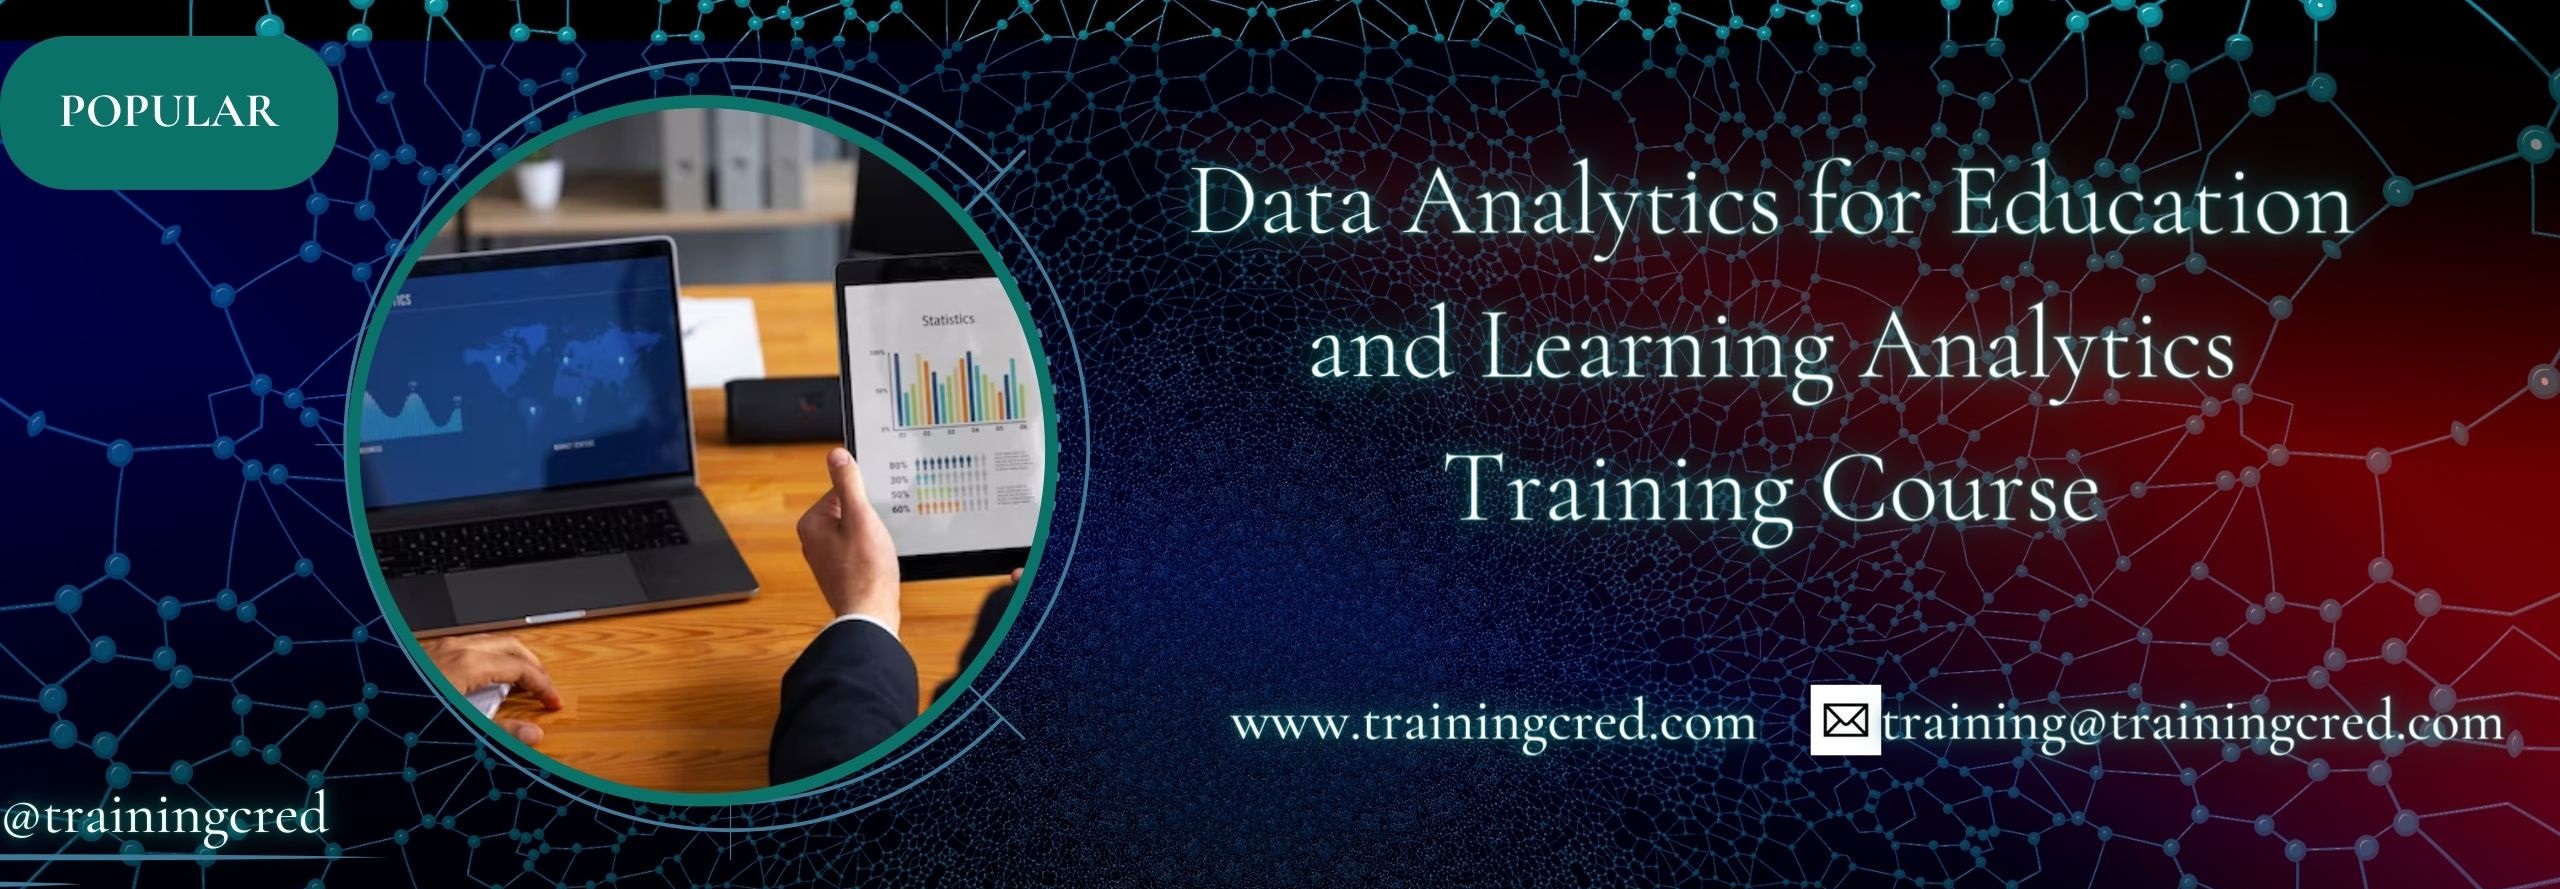 Data Analytics for Education and Learning Analytics Training